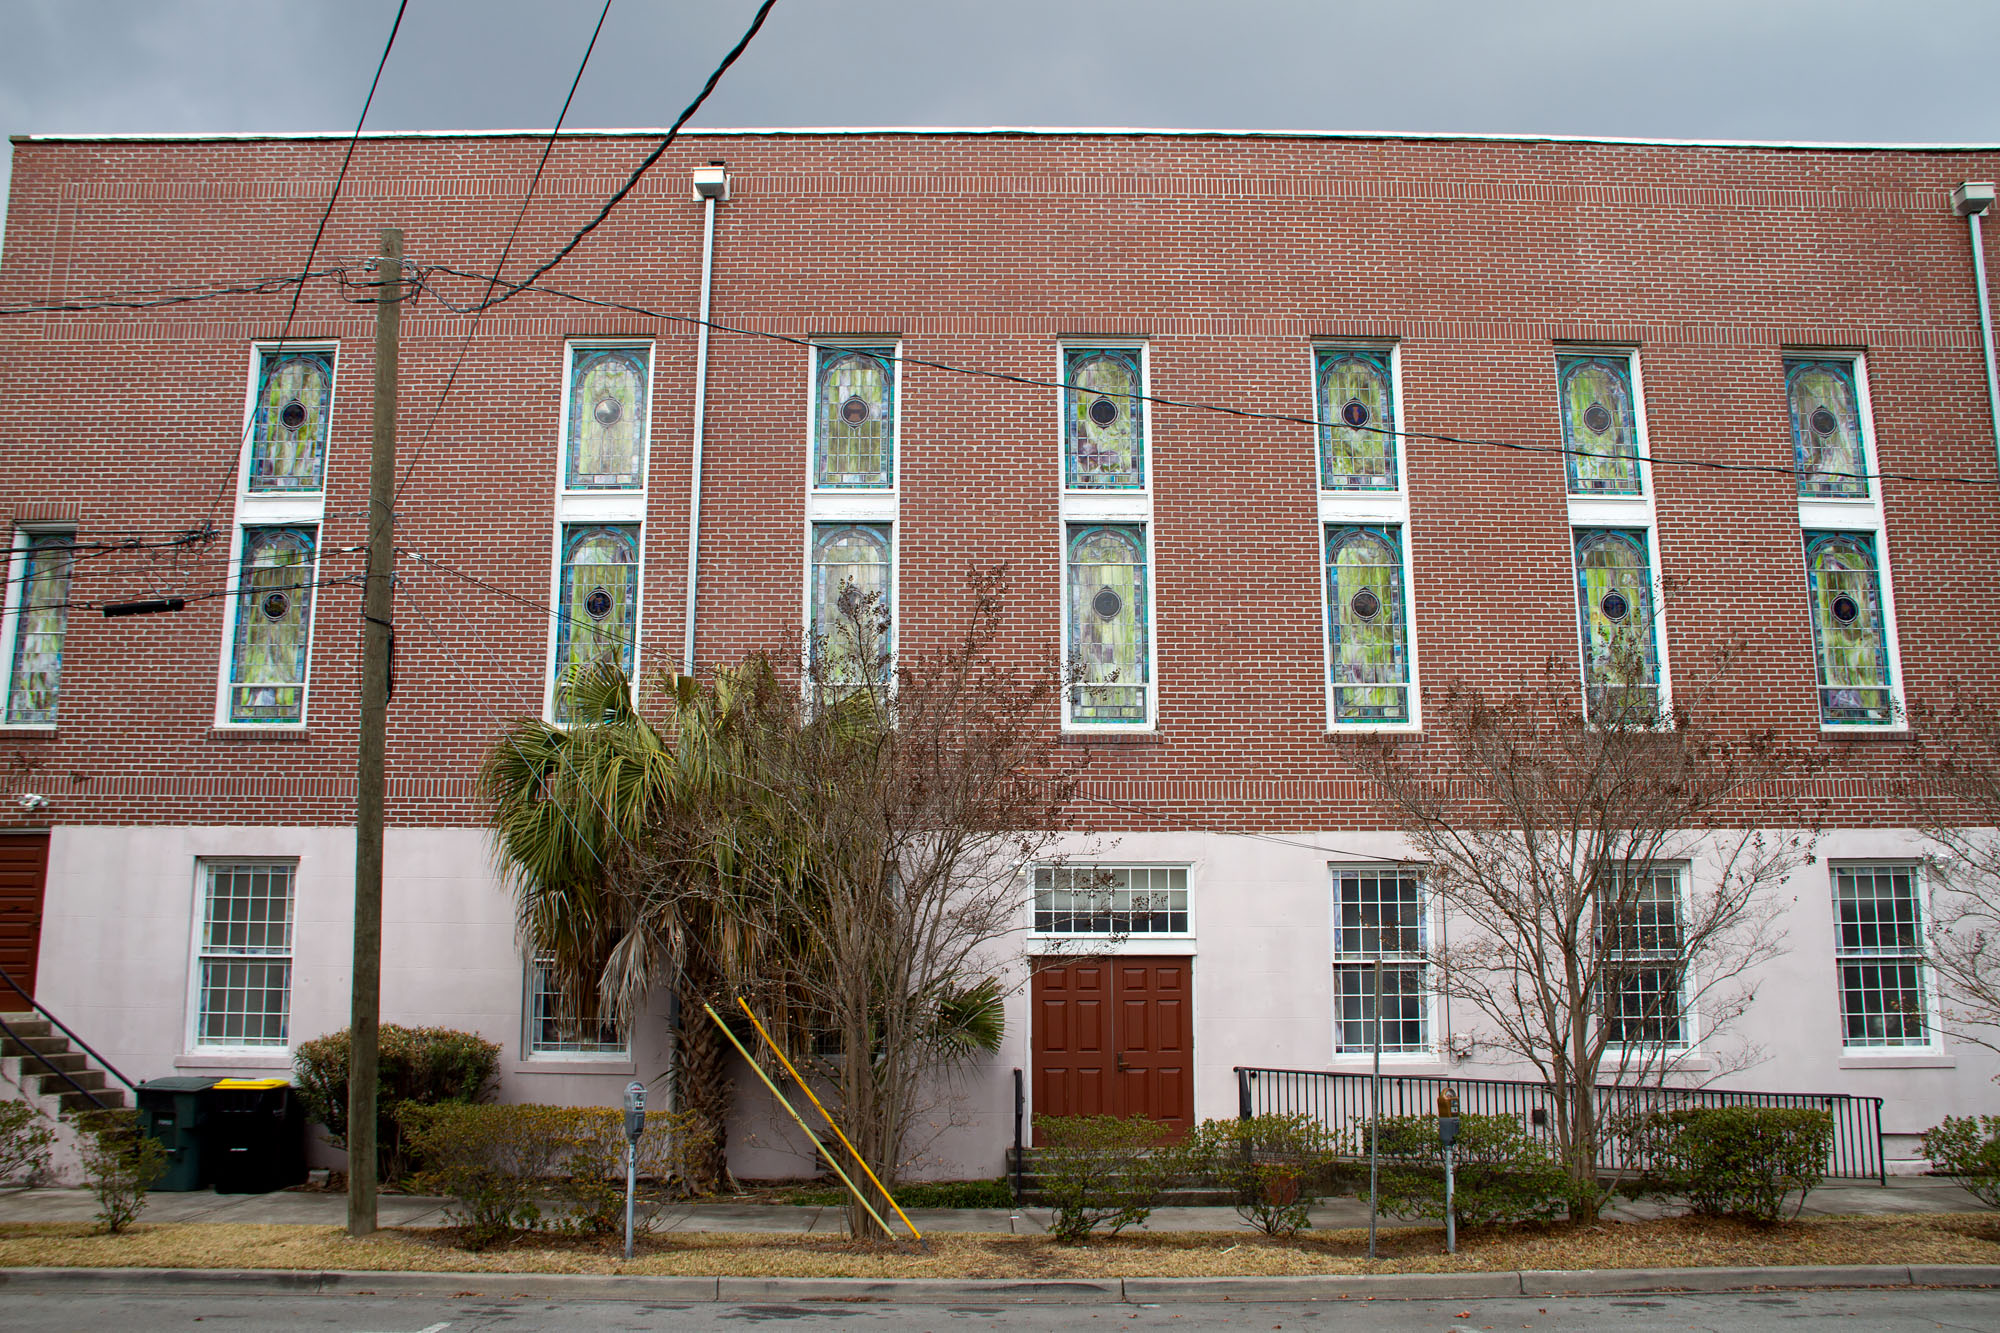 Building Second African Baptist Church in Savannah